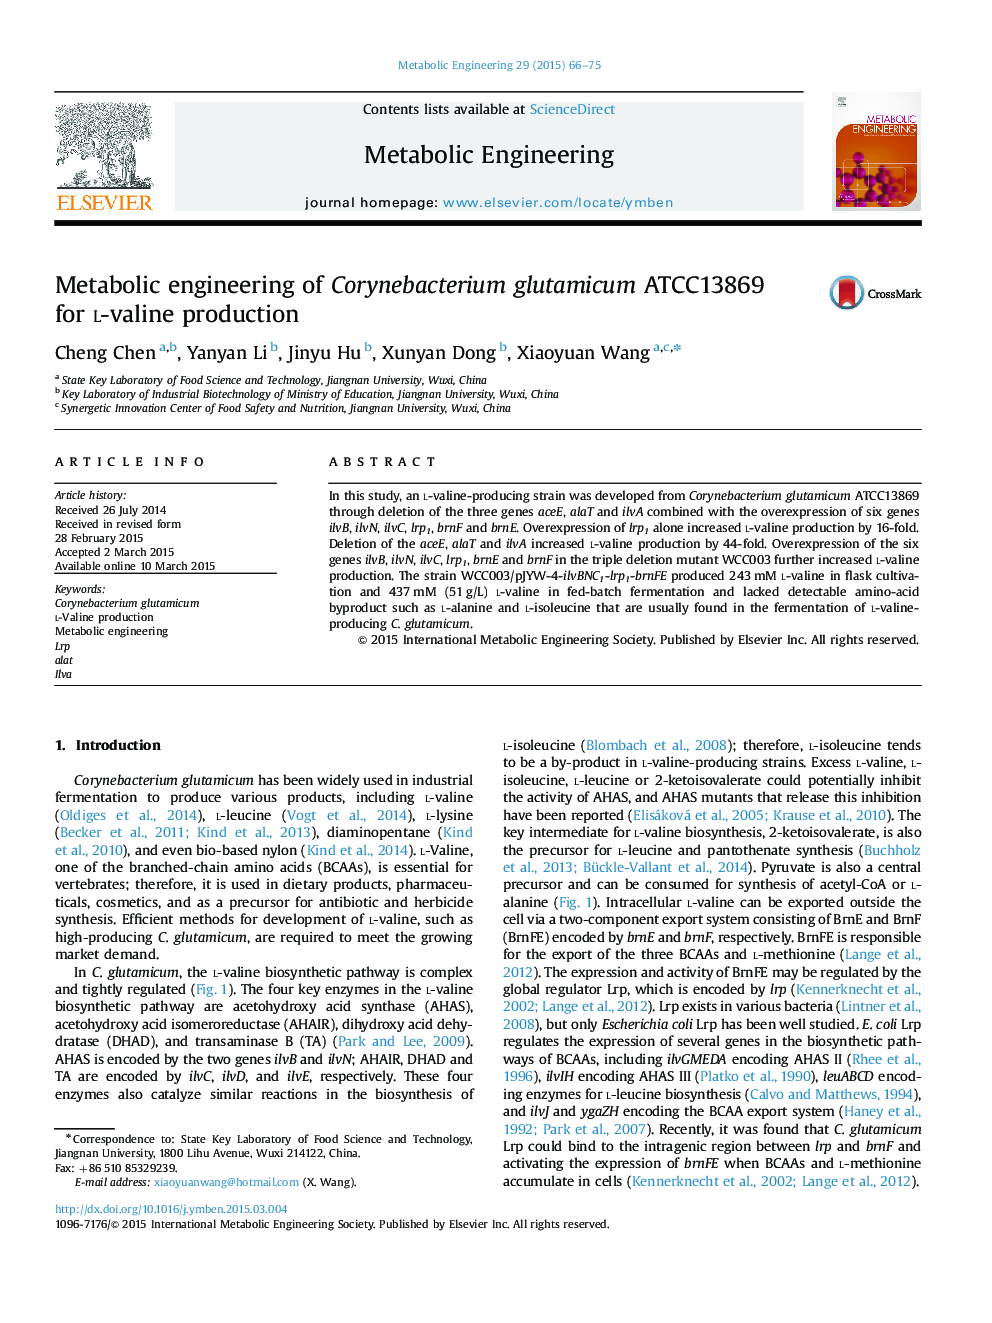 Metabolic engineering of Corynebacterium glutamicum ATCC13869 for l-valine production